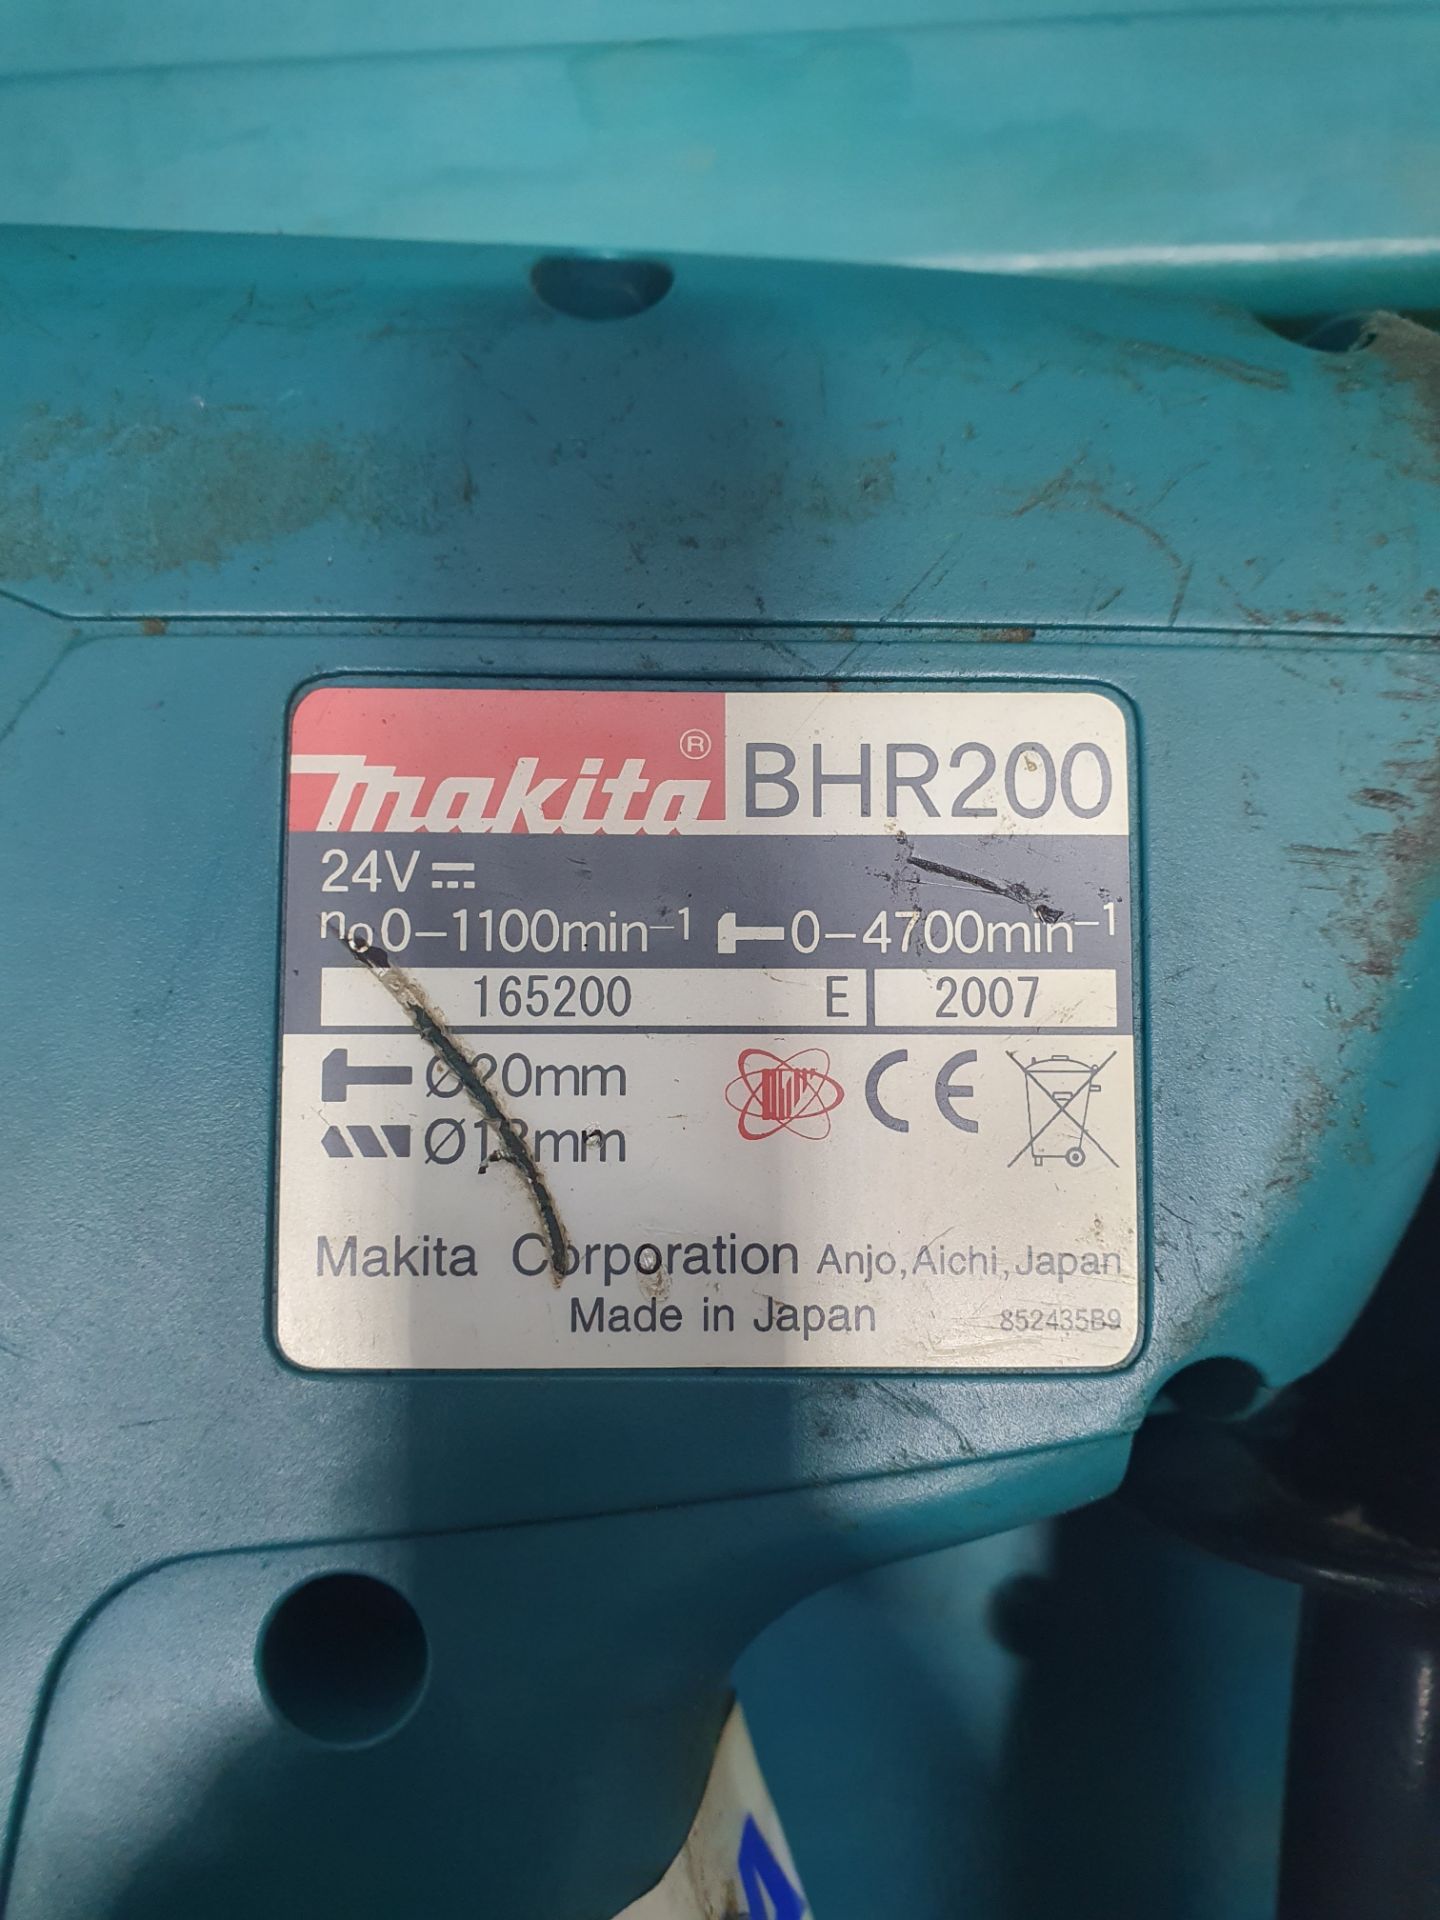 Makita BHR200 24V Cordless Hammer Drill in Case - Image 4 of 5